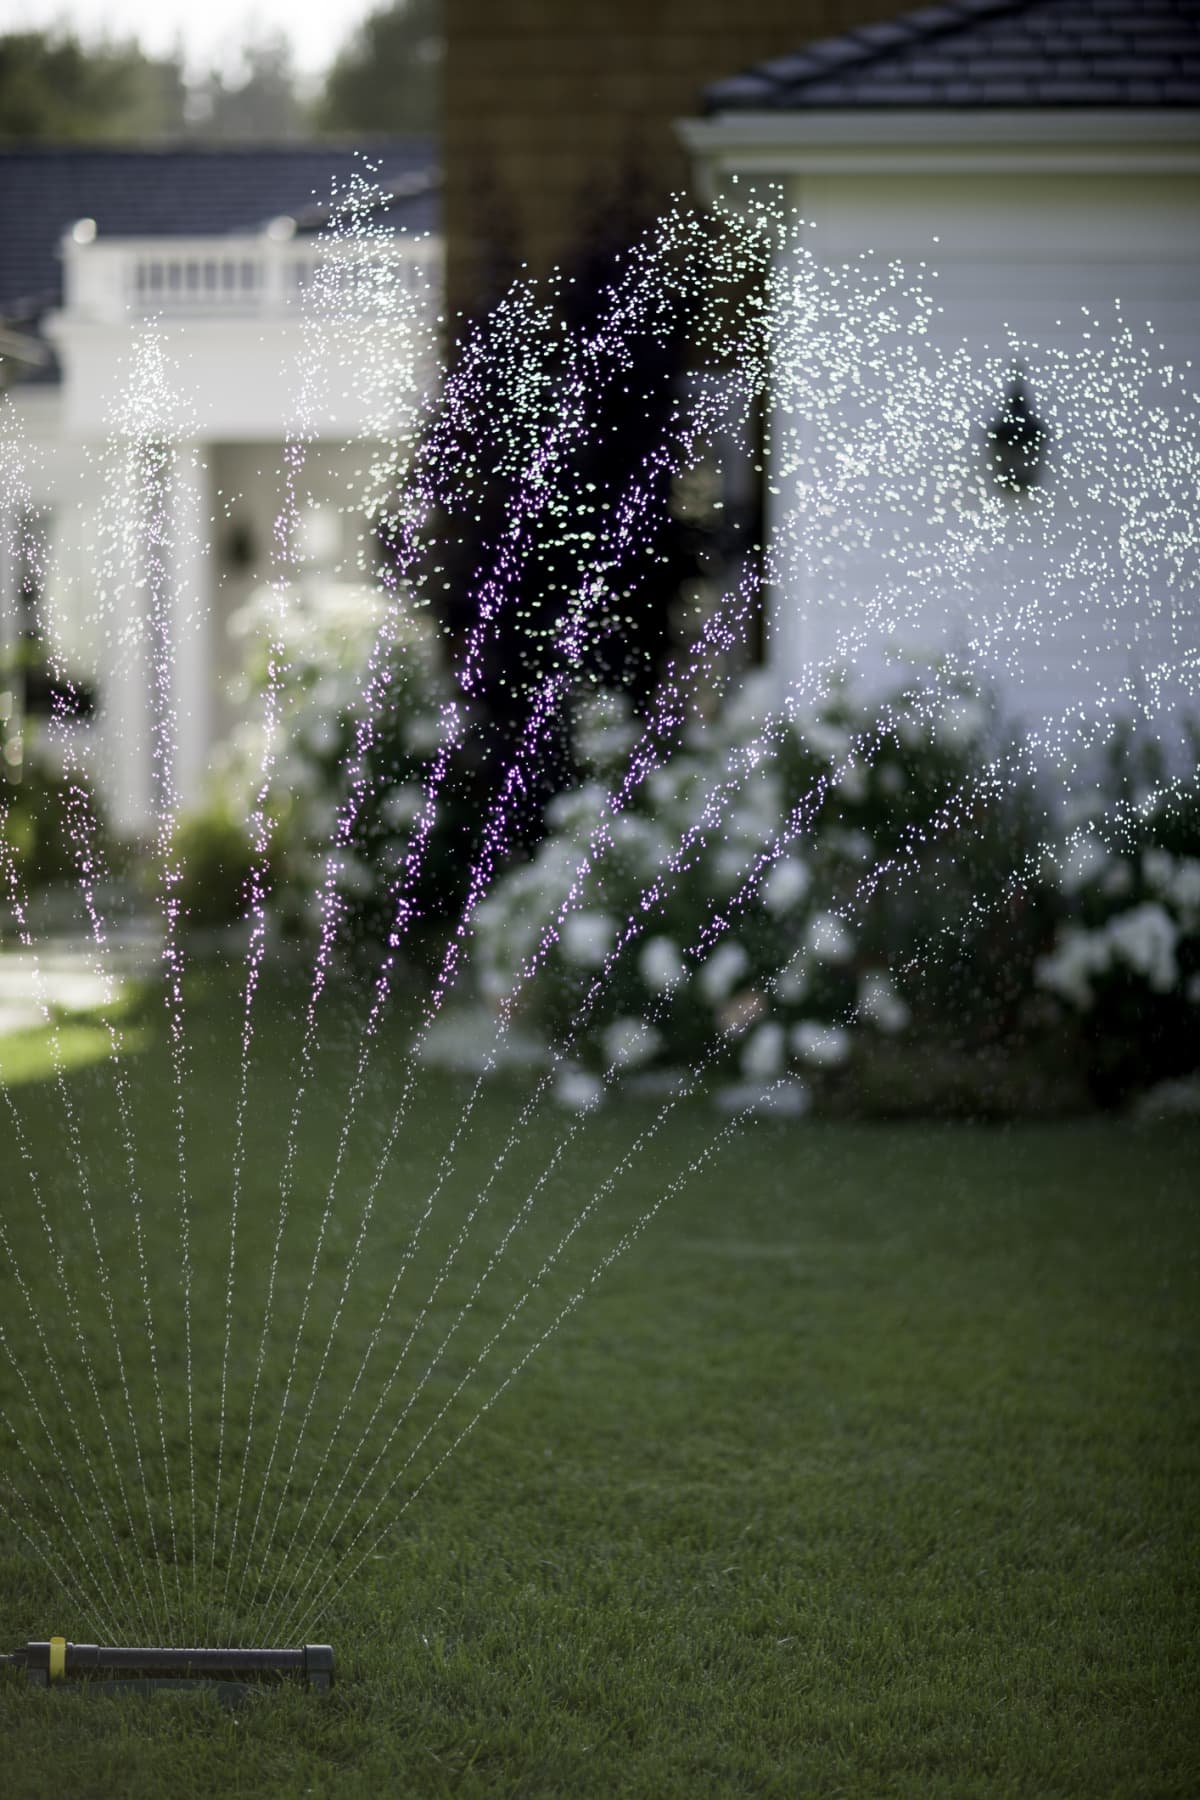 Sprays of water from sprinkler on lawn